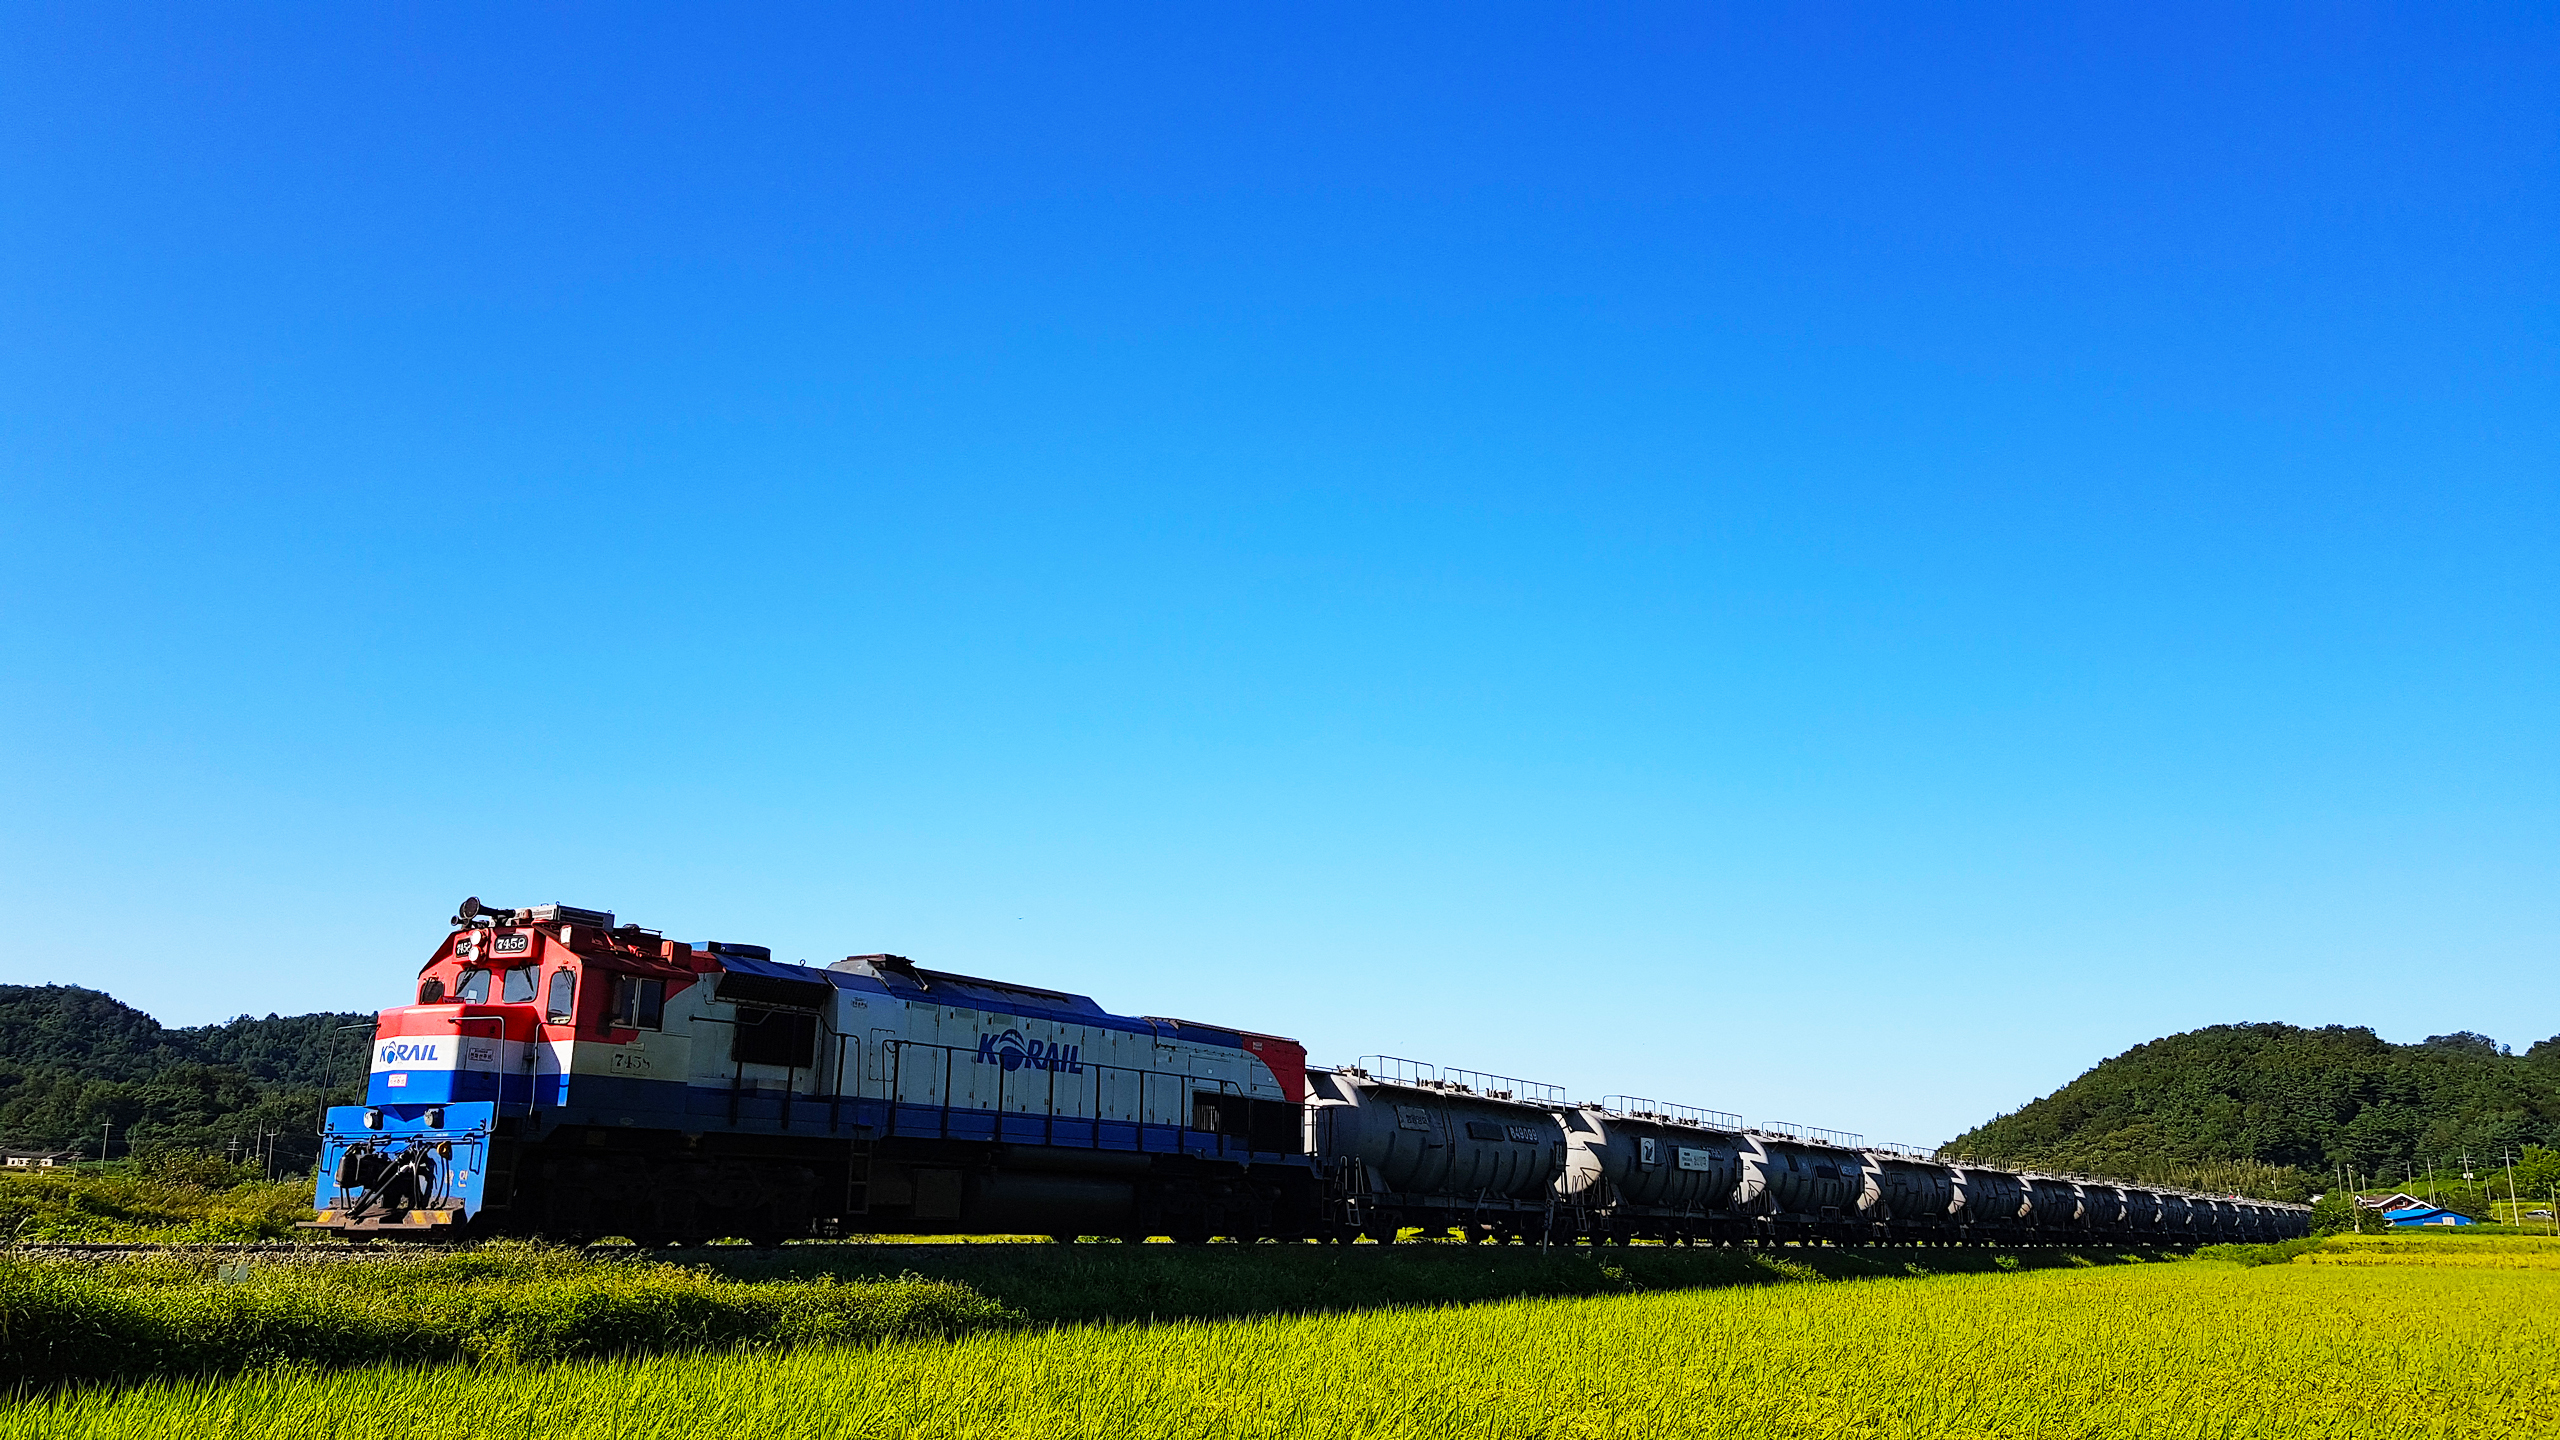 General 2560x1440 train freight train South Korea farm landscape